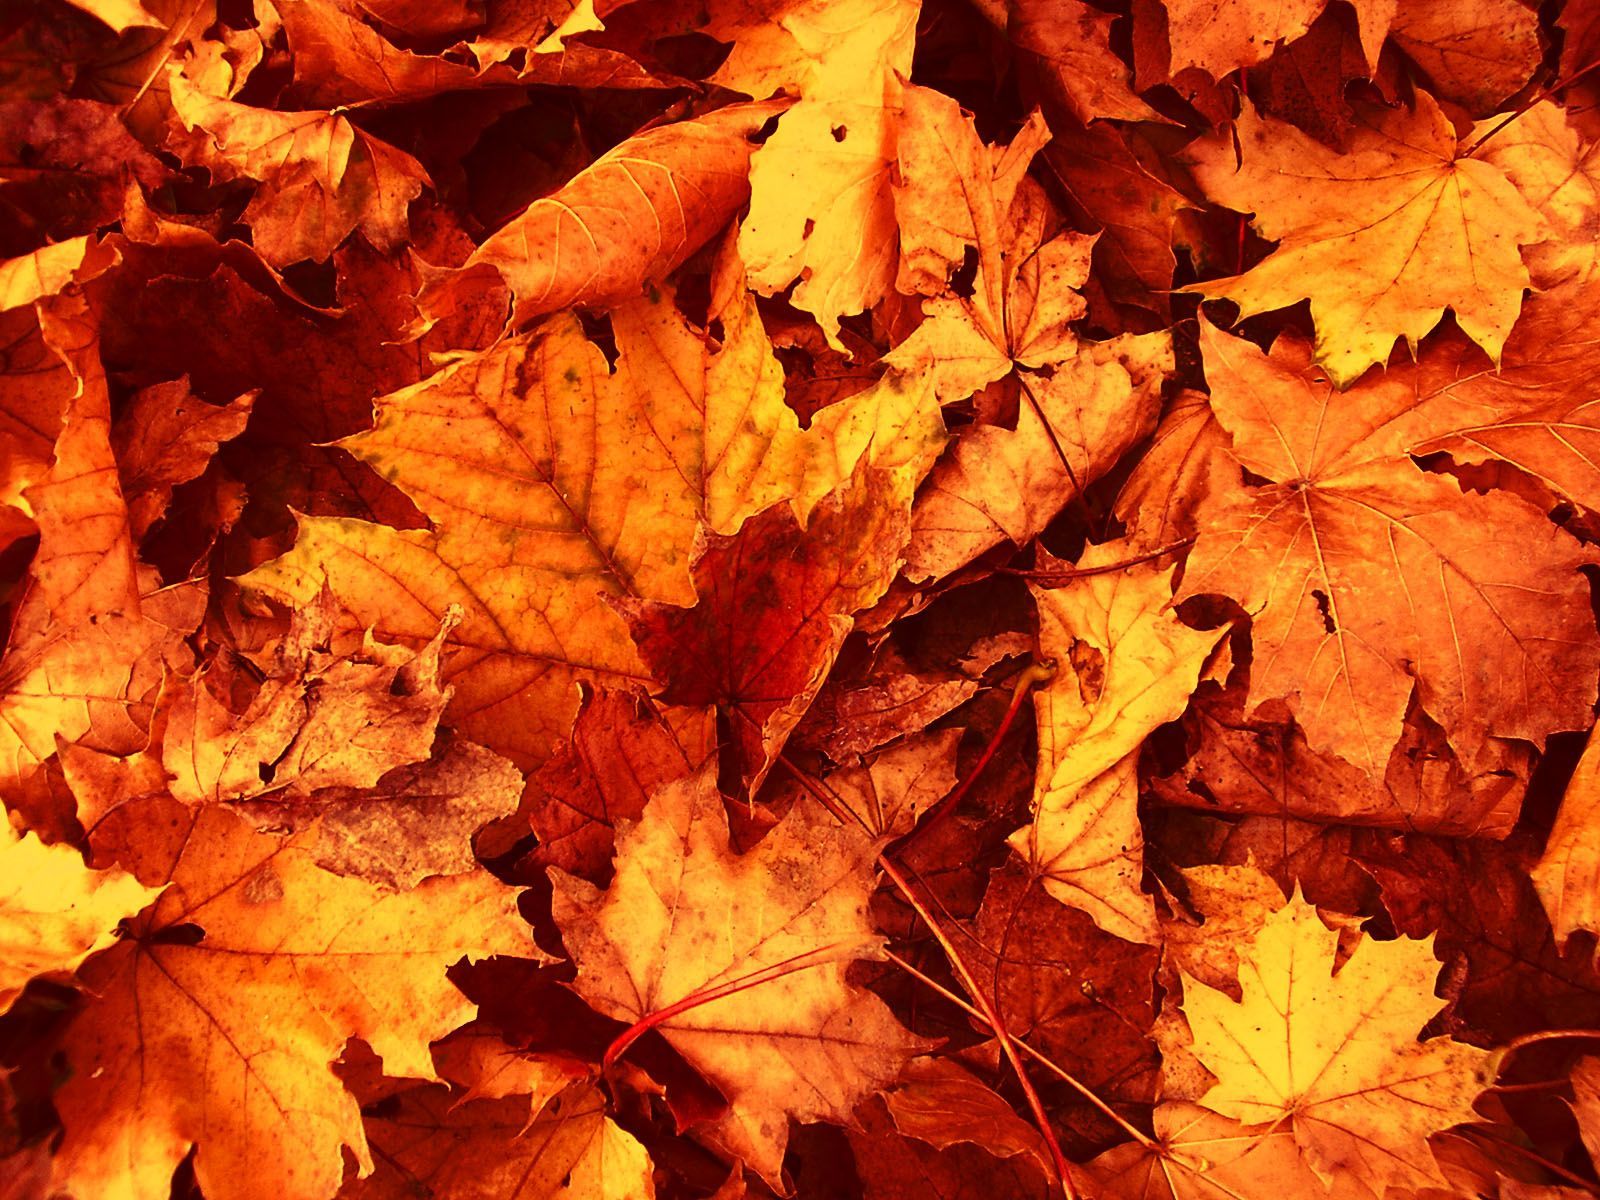 Fall Leaves Wallpaper High Definition. Autumn leaves wallpaper, Fall leaves background, Fall wallpaper